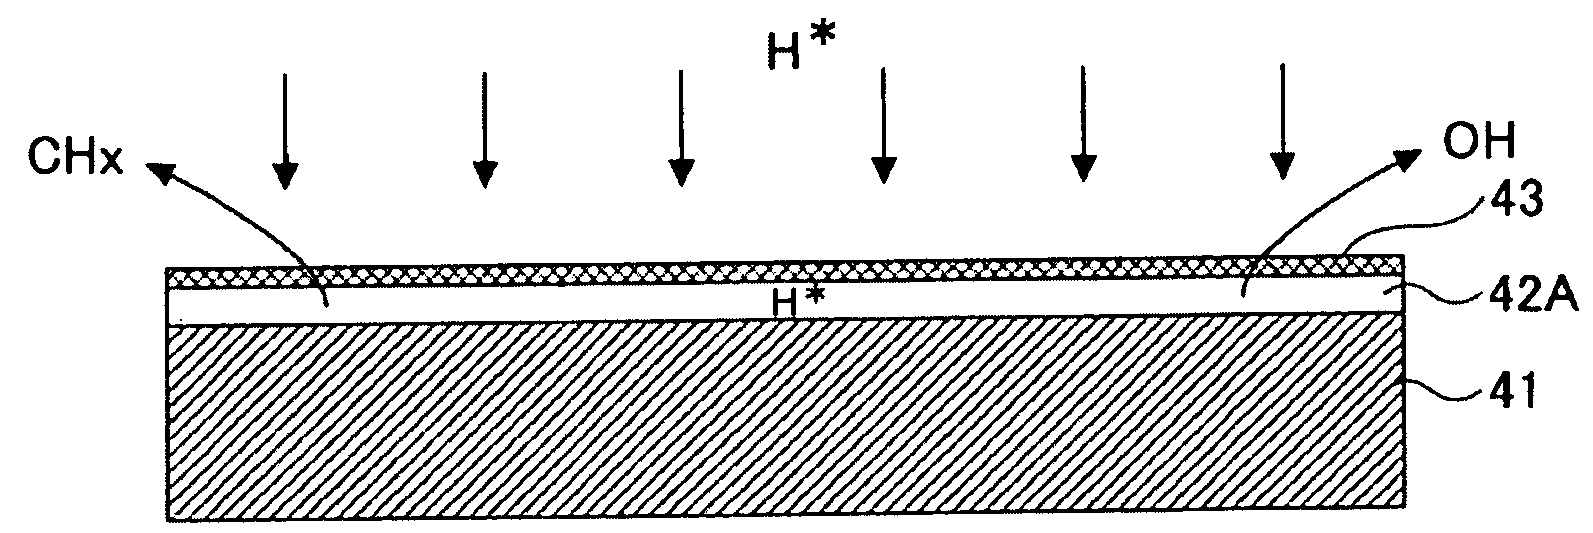 Film forming method of porous film and computer-readable recording medium